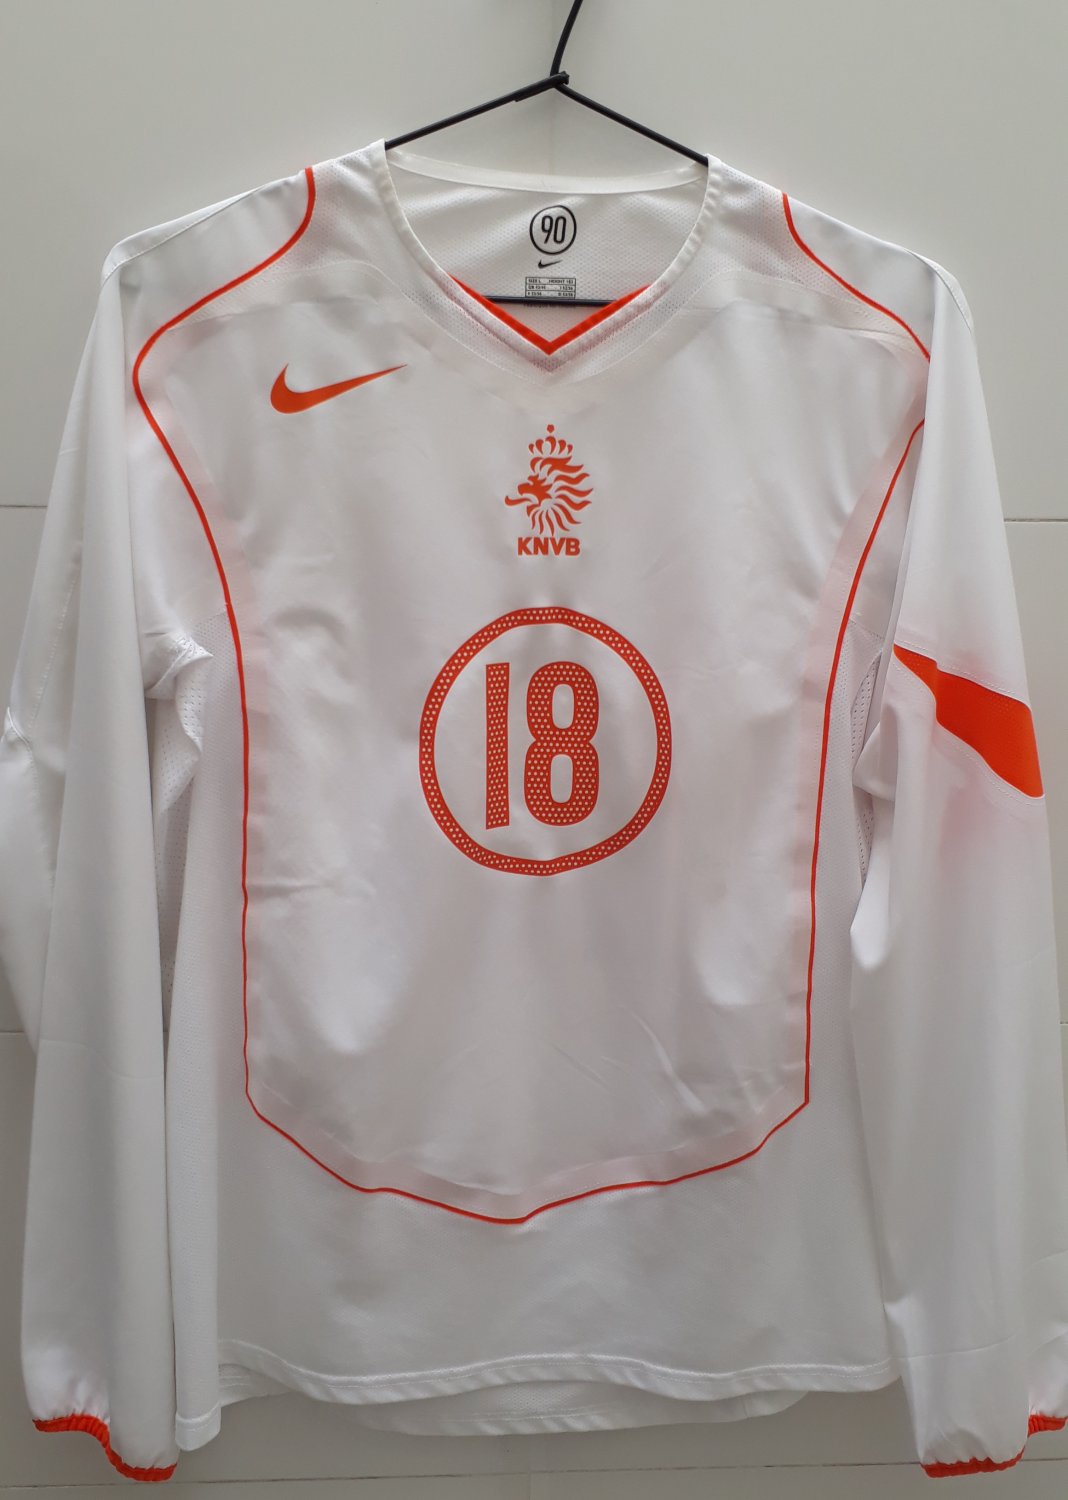 Set Flock nameset Home camiseta camisa jersey Países Bajos Netherlands elftal 2006